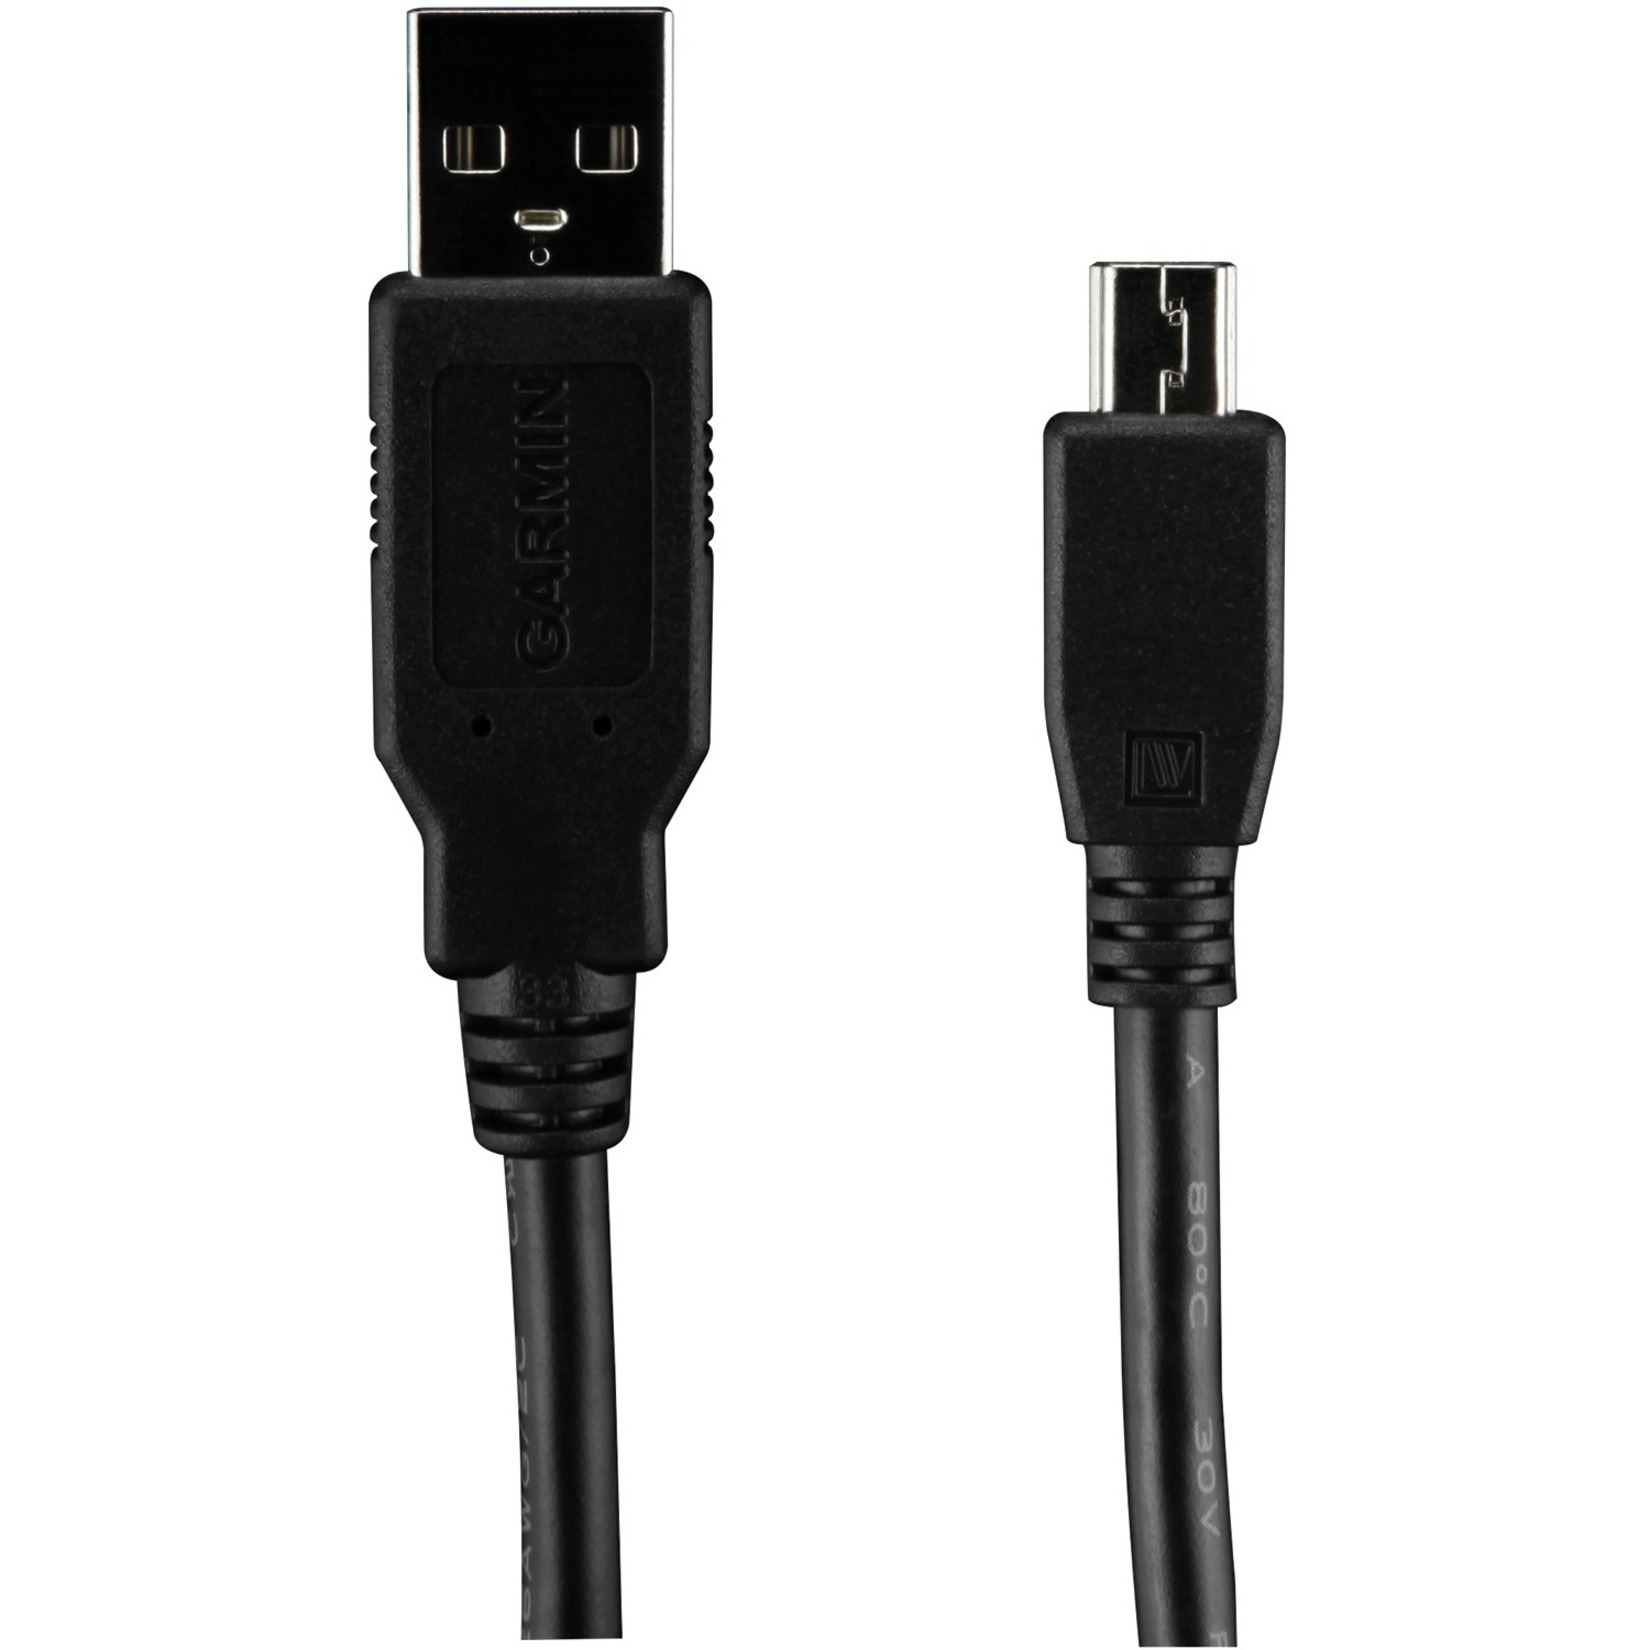 Garmin 010-10723-01 USB to Mini USB Data Cable - image 5 of 5